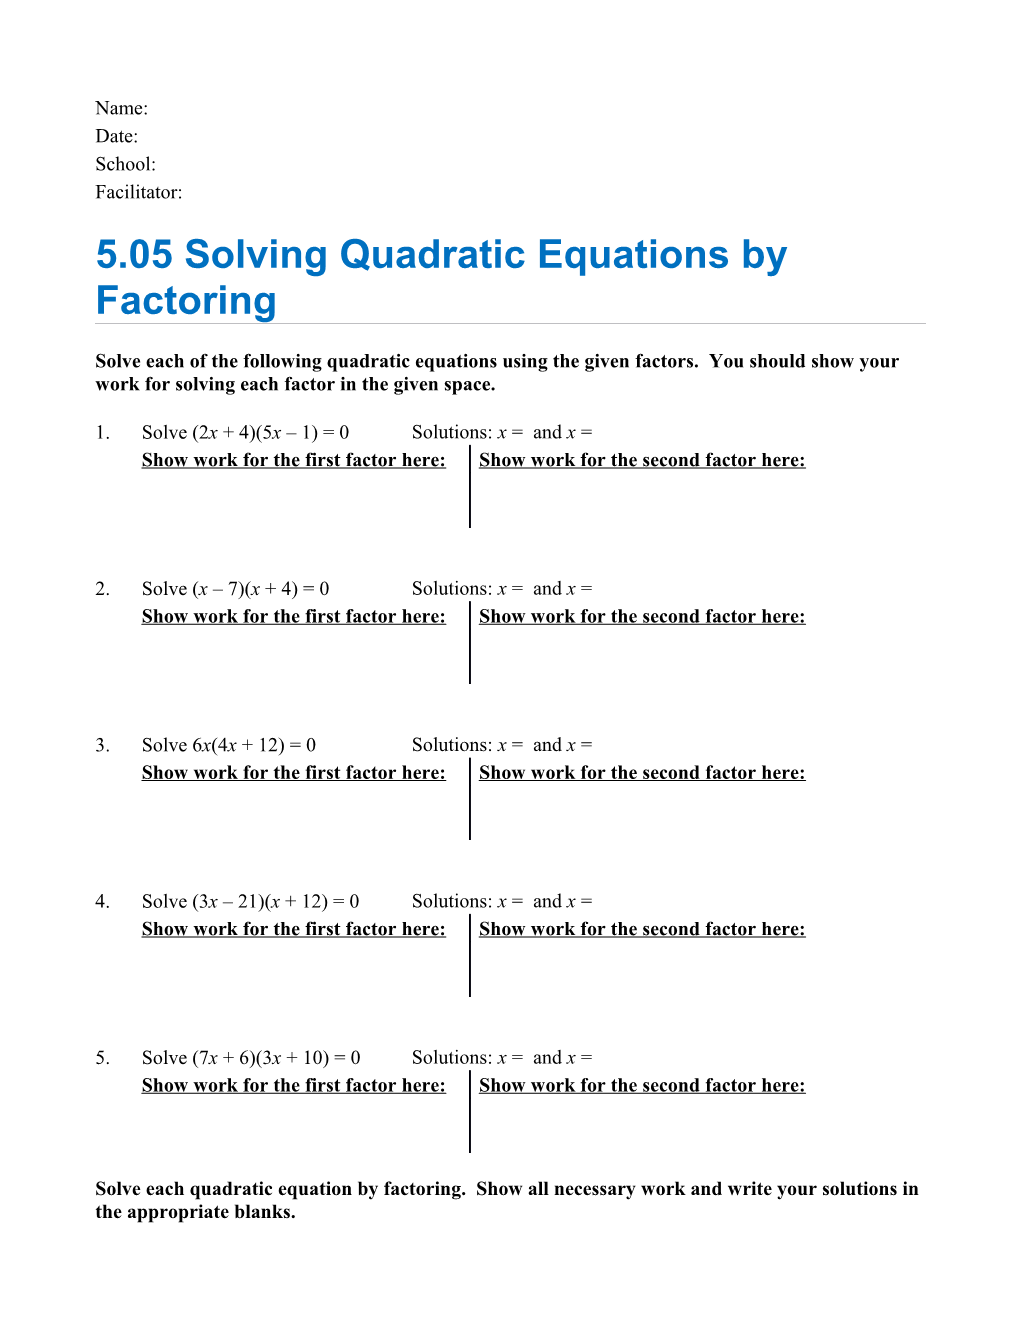 5.05 Solving Quadratic Equations by Factoring